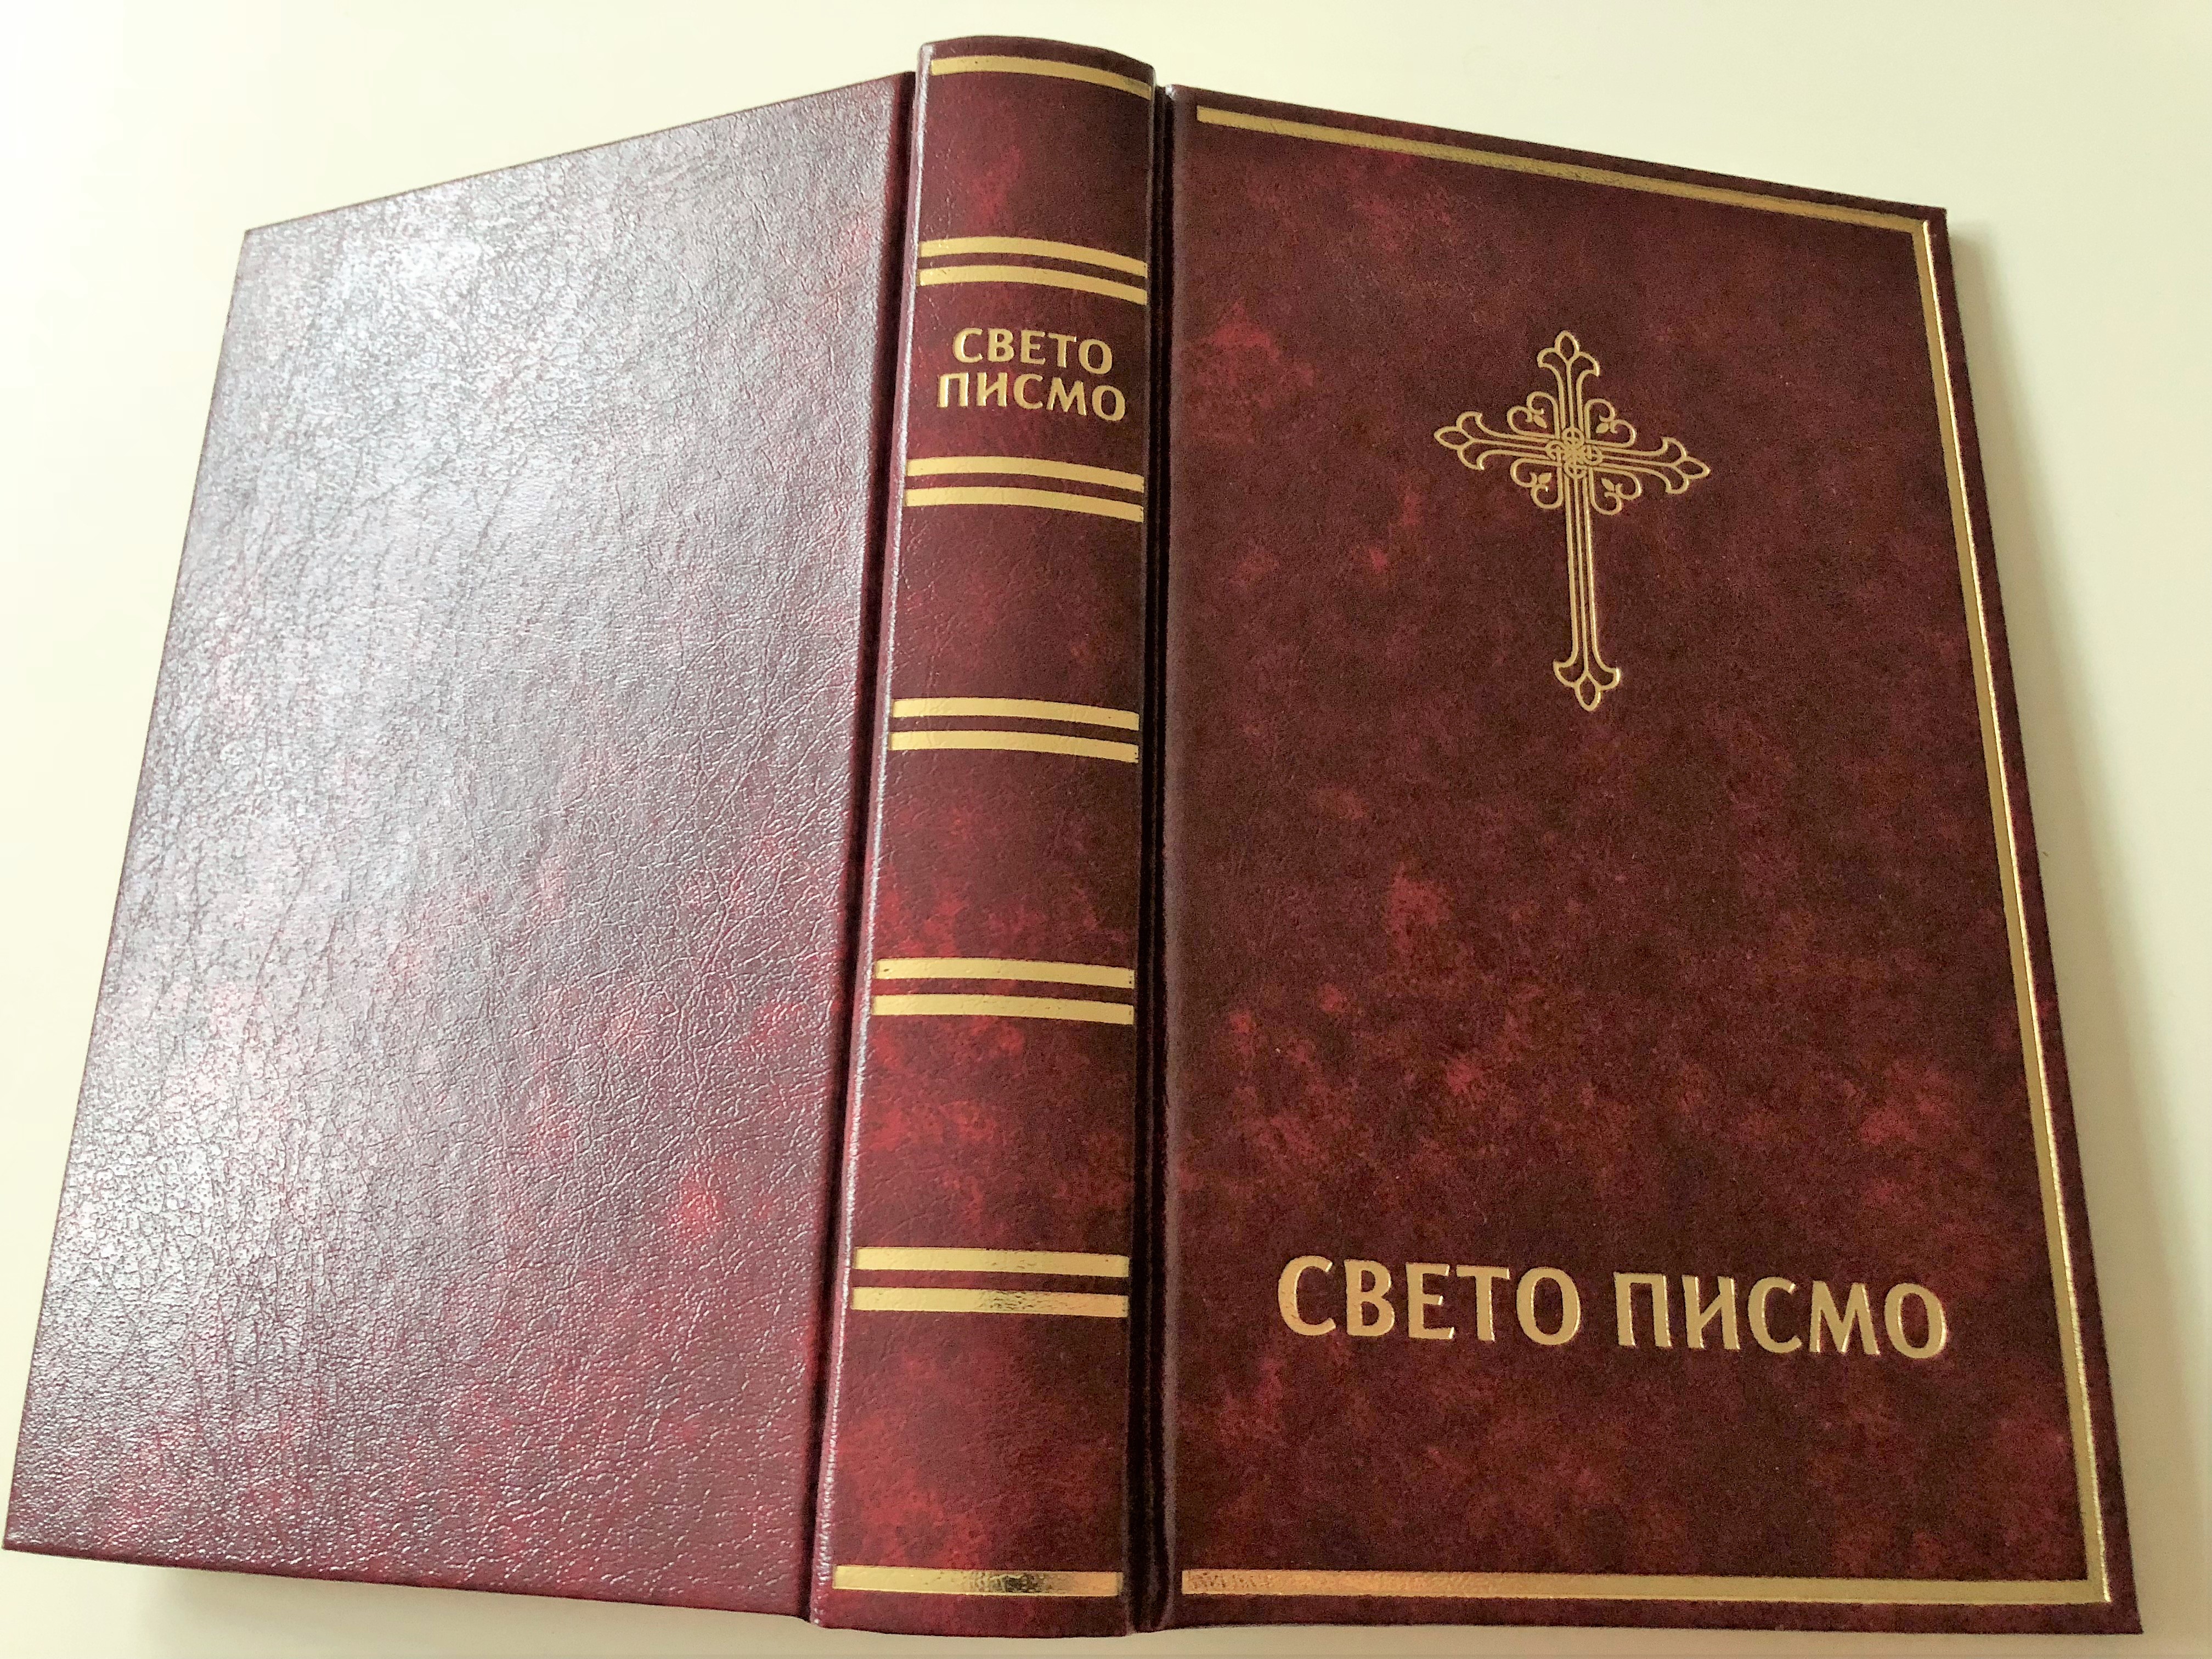 serbian-language-bible-burgundy-cover-with-golden-cross-cyrillic-script-043hs-s-6-.jpg